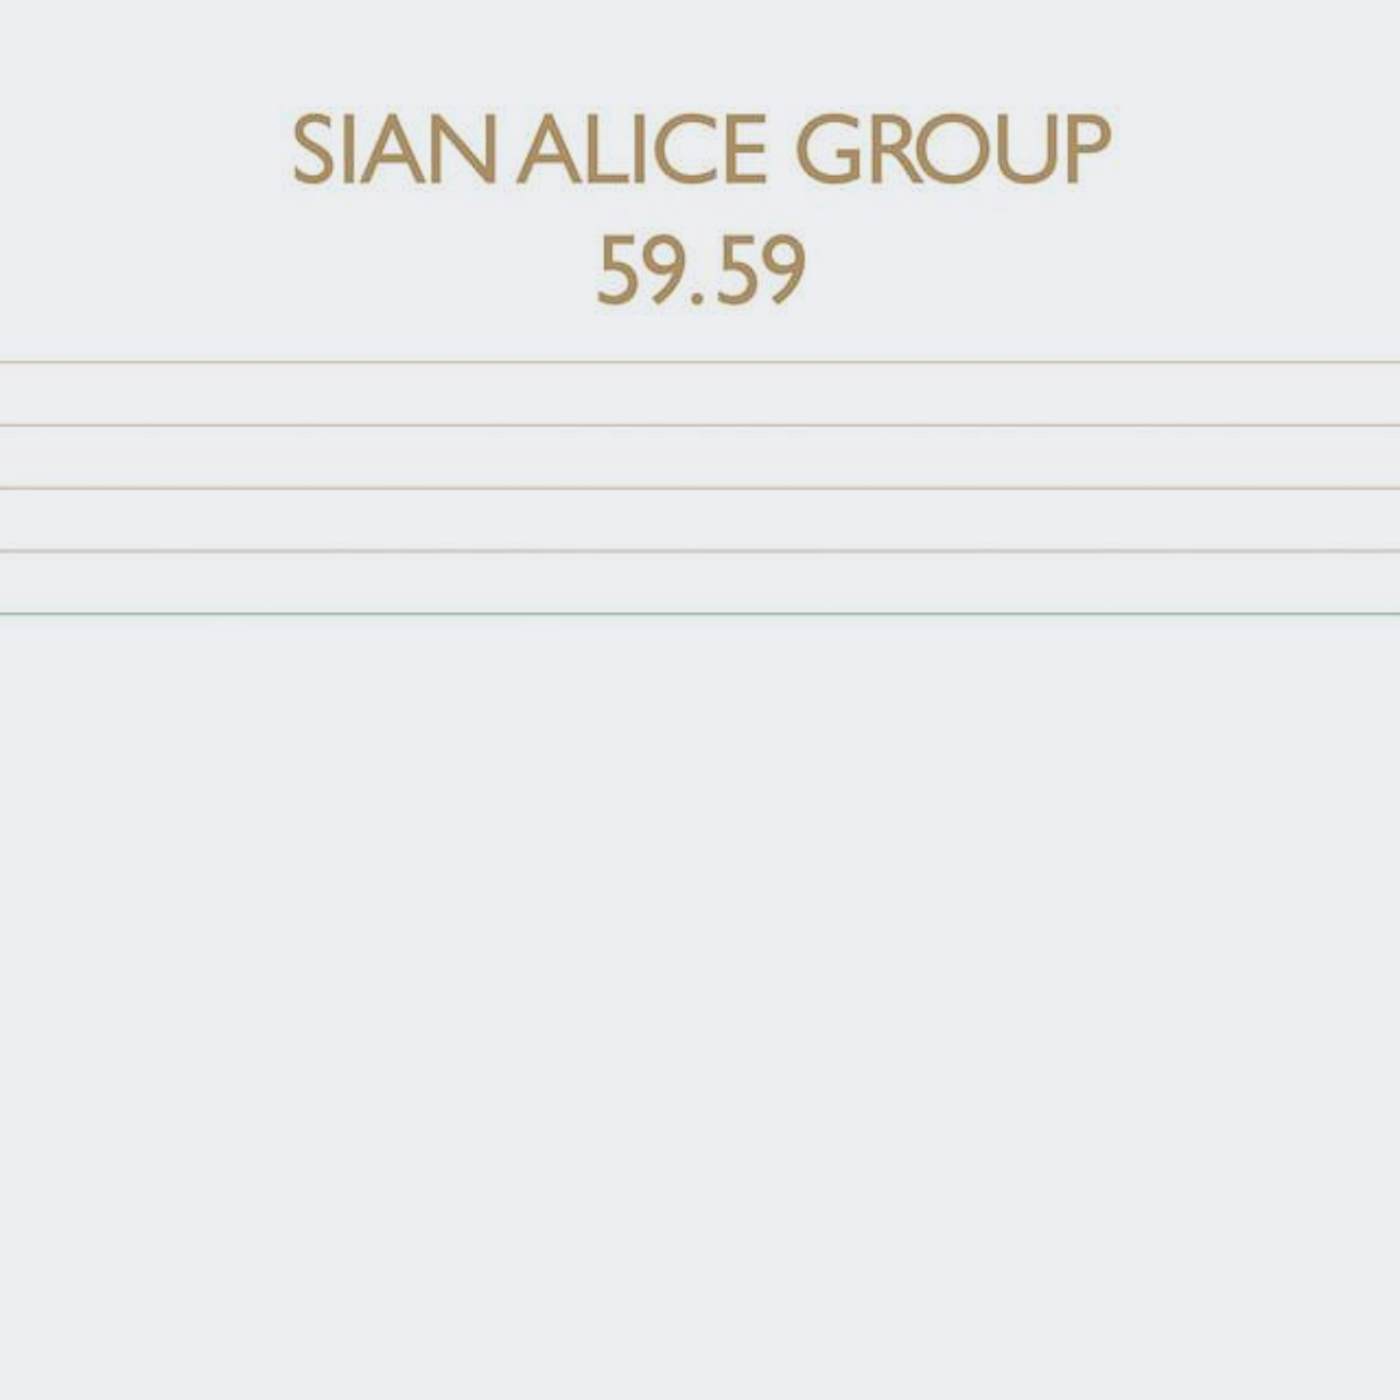 Sian Alice Group